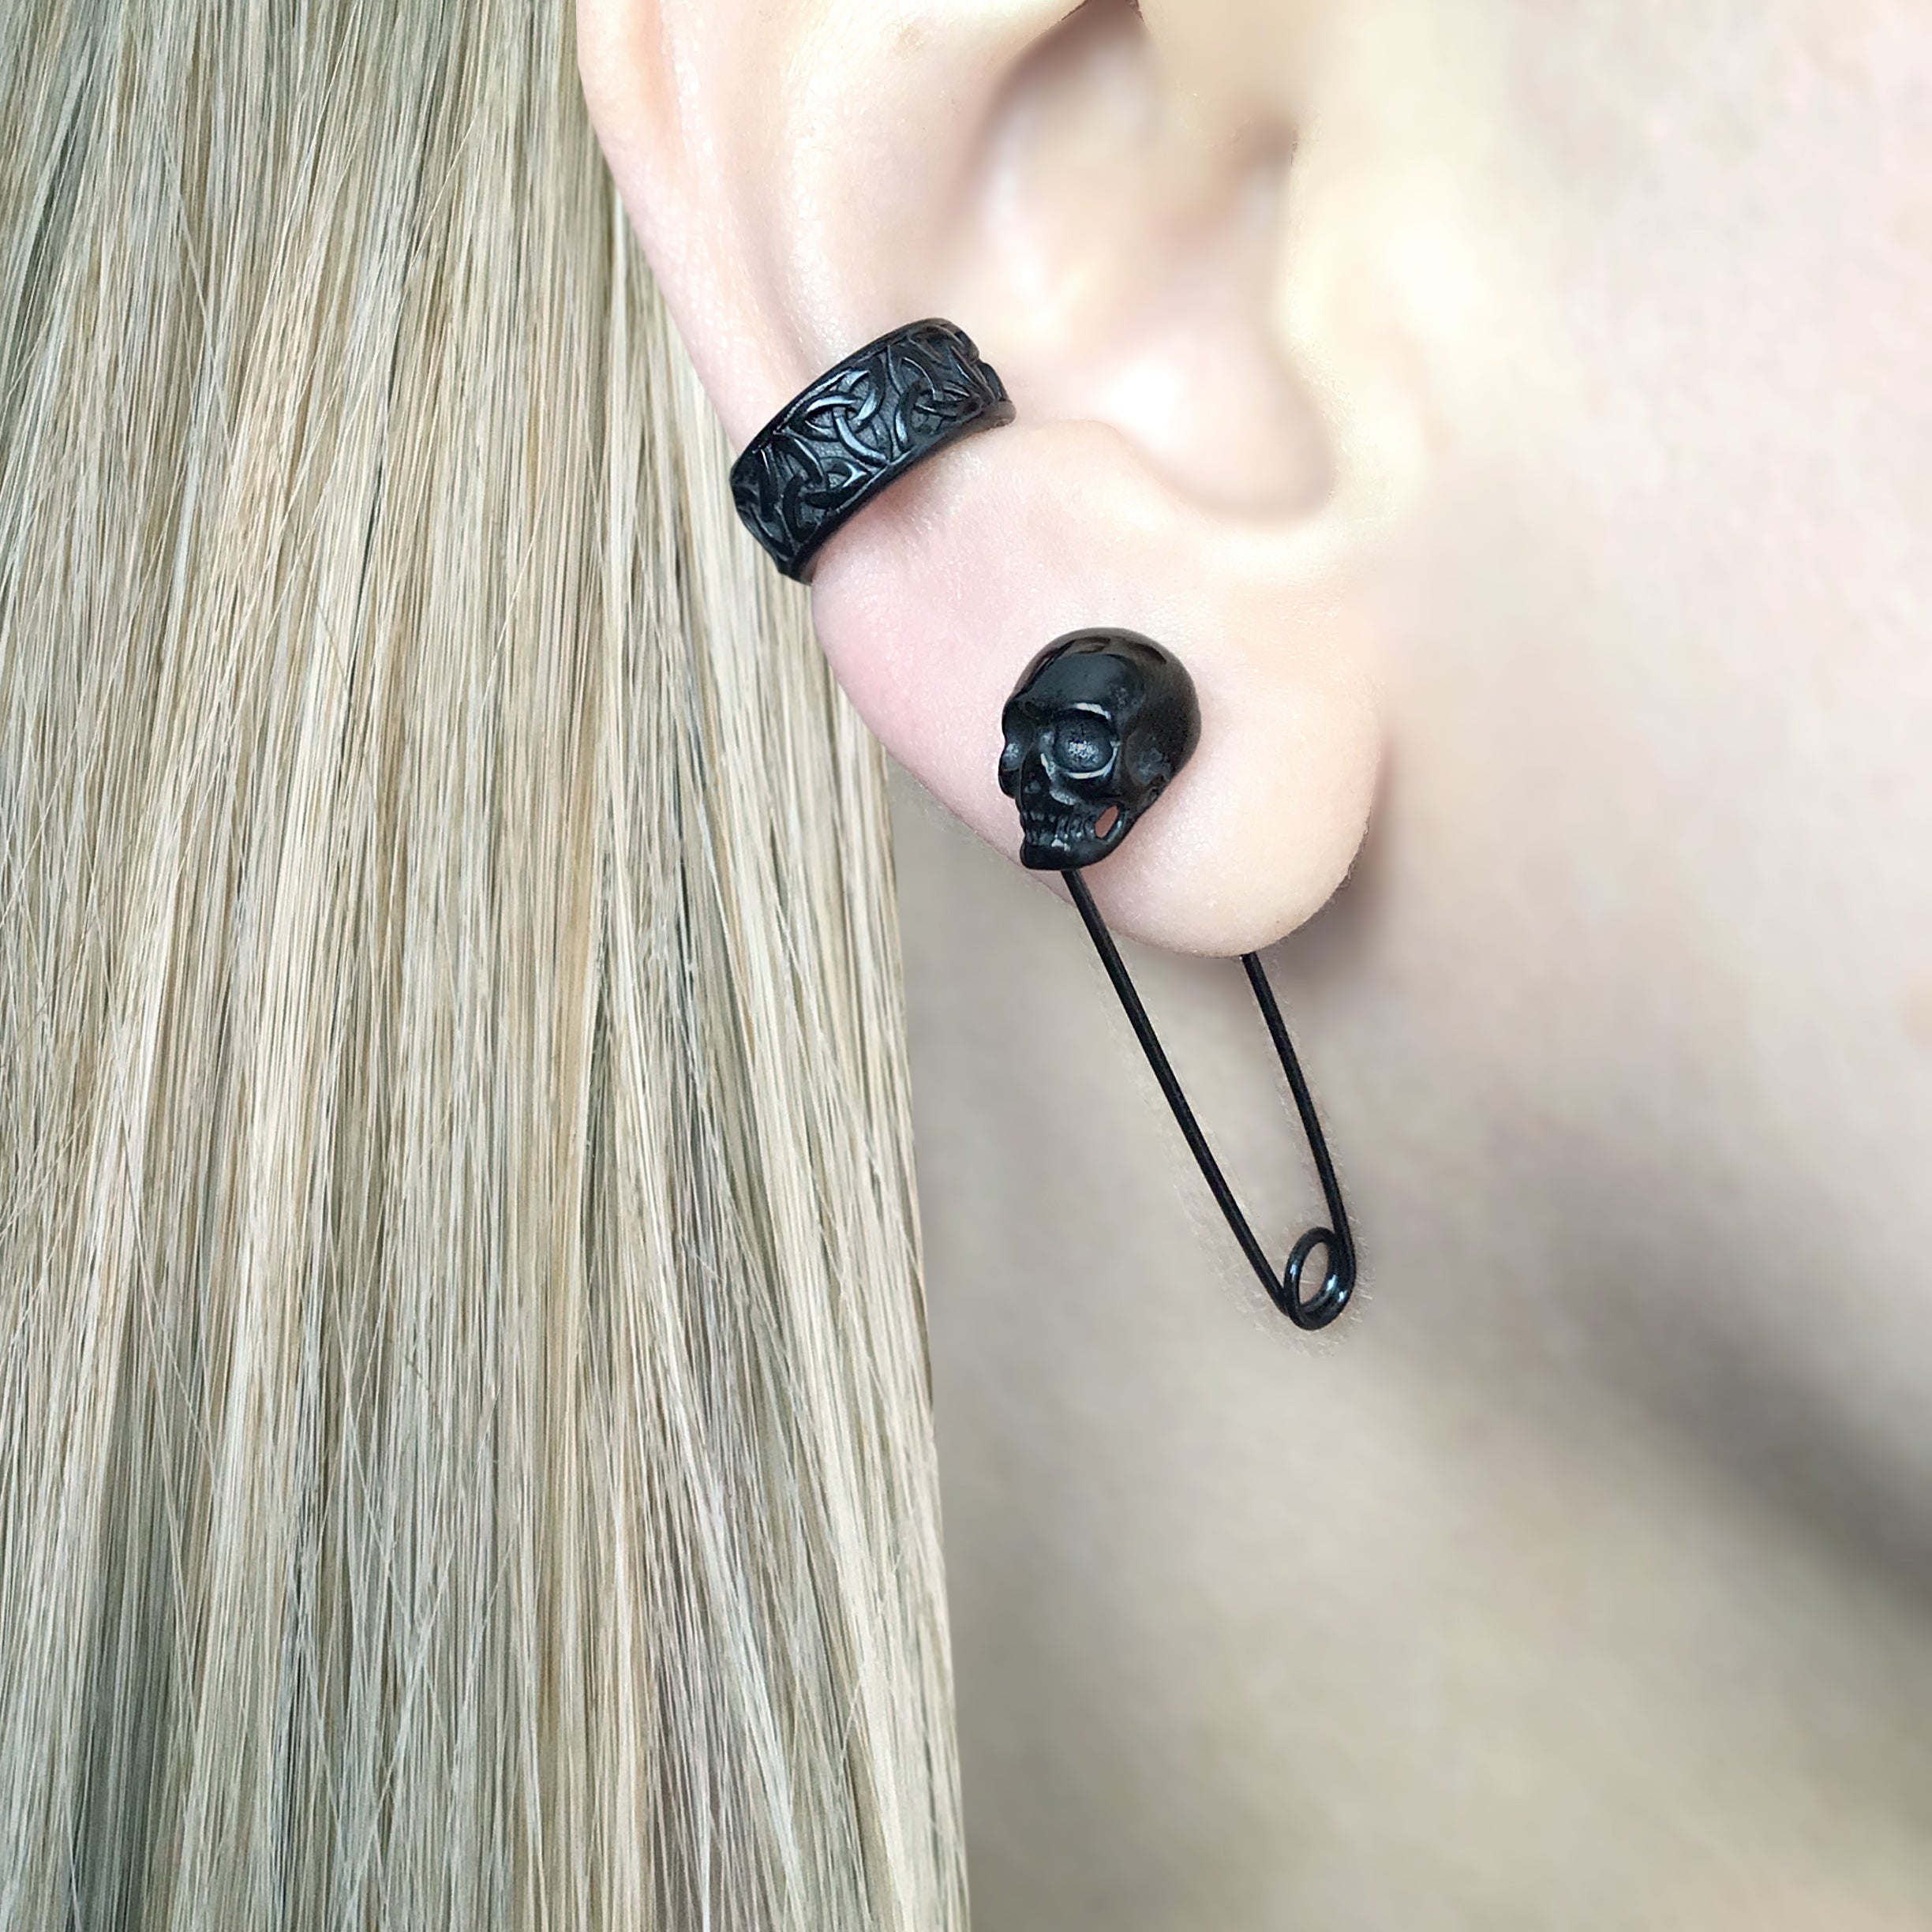 SKULL PIN EARRINGS IN BLACK